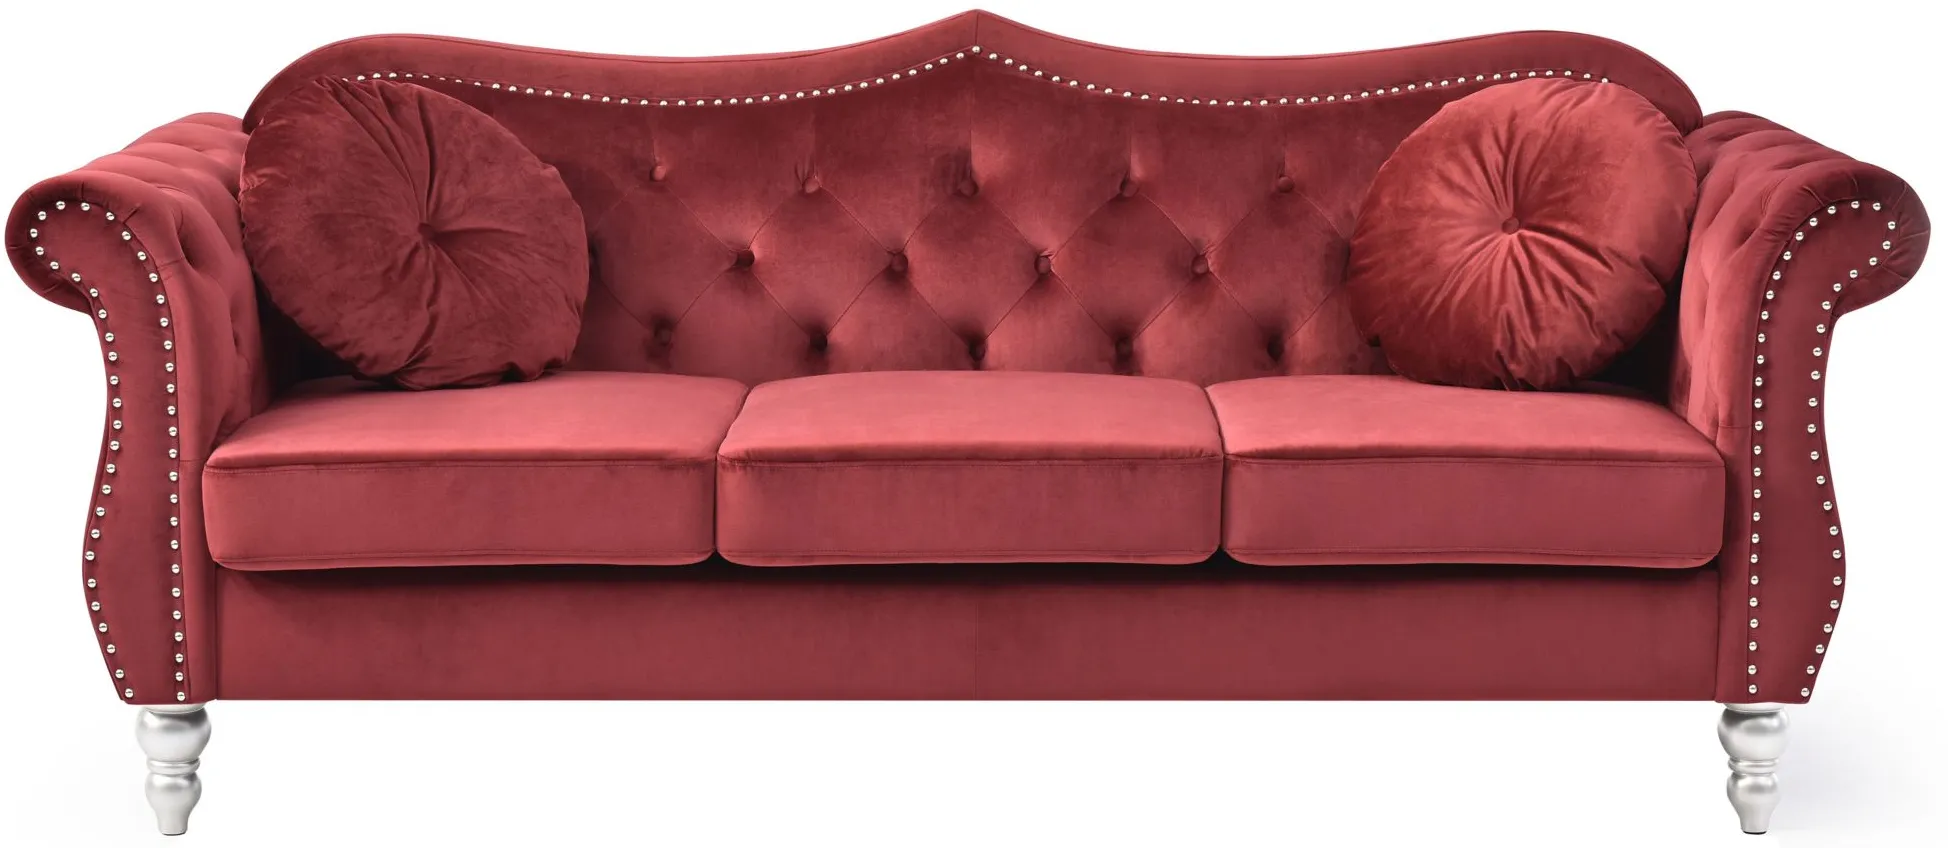 Hollywood Sofa in Burgundy by Glory Furniture